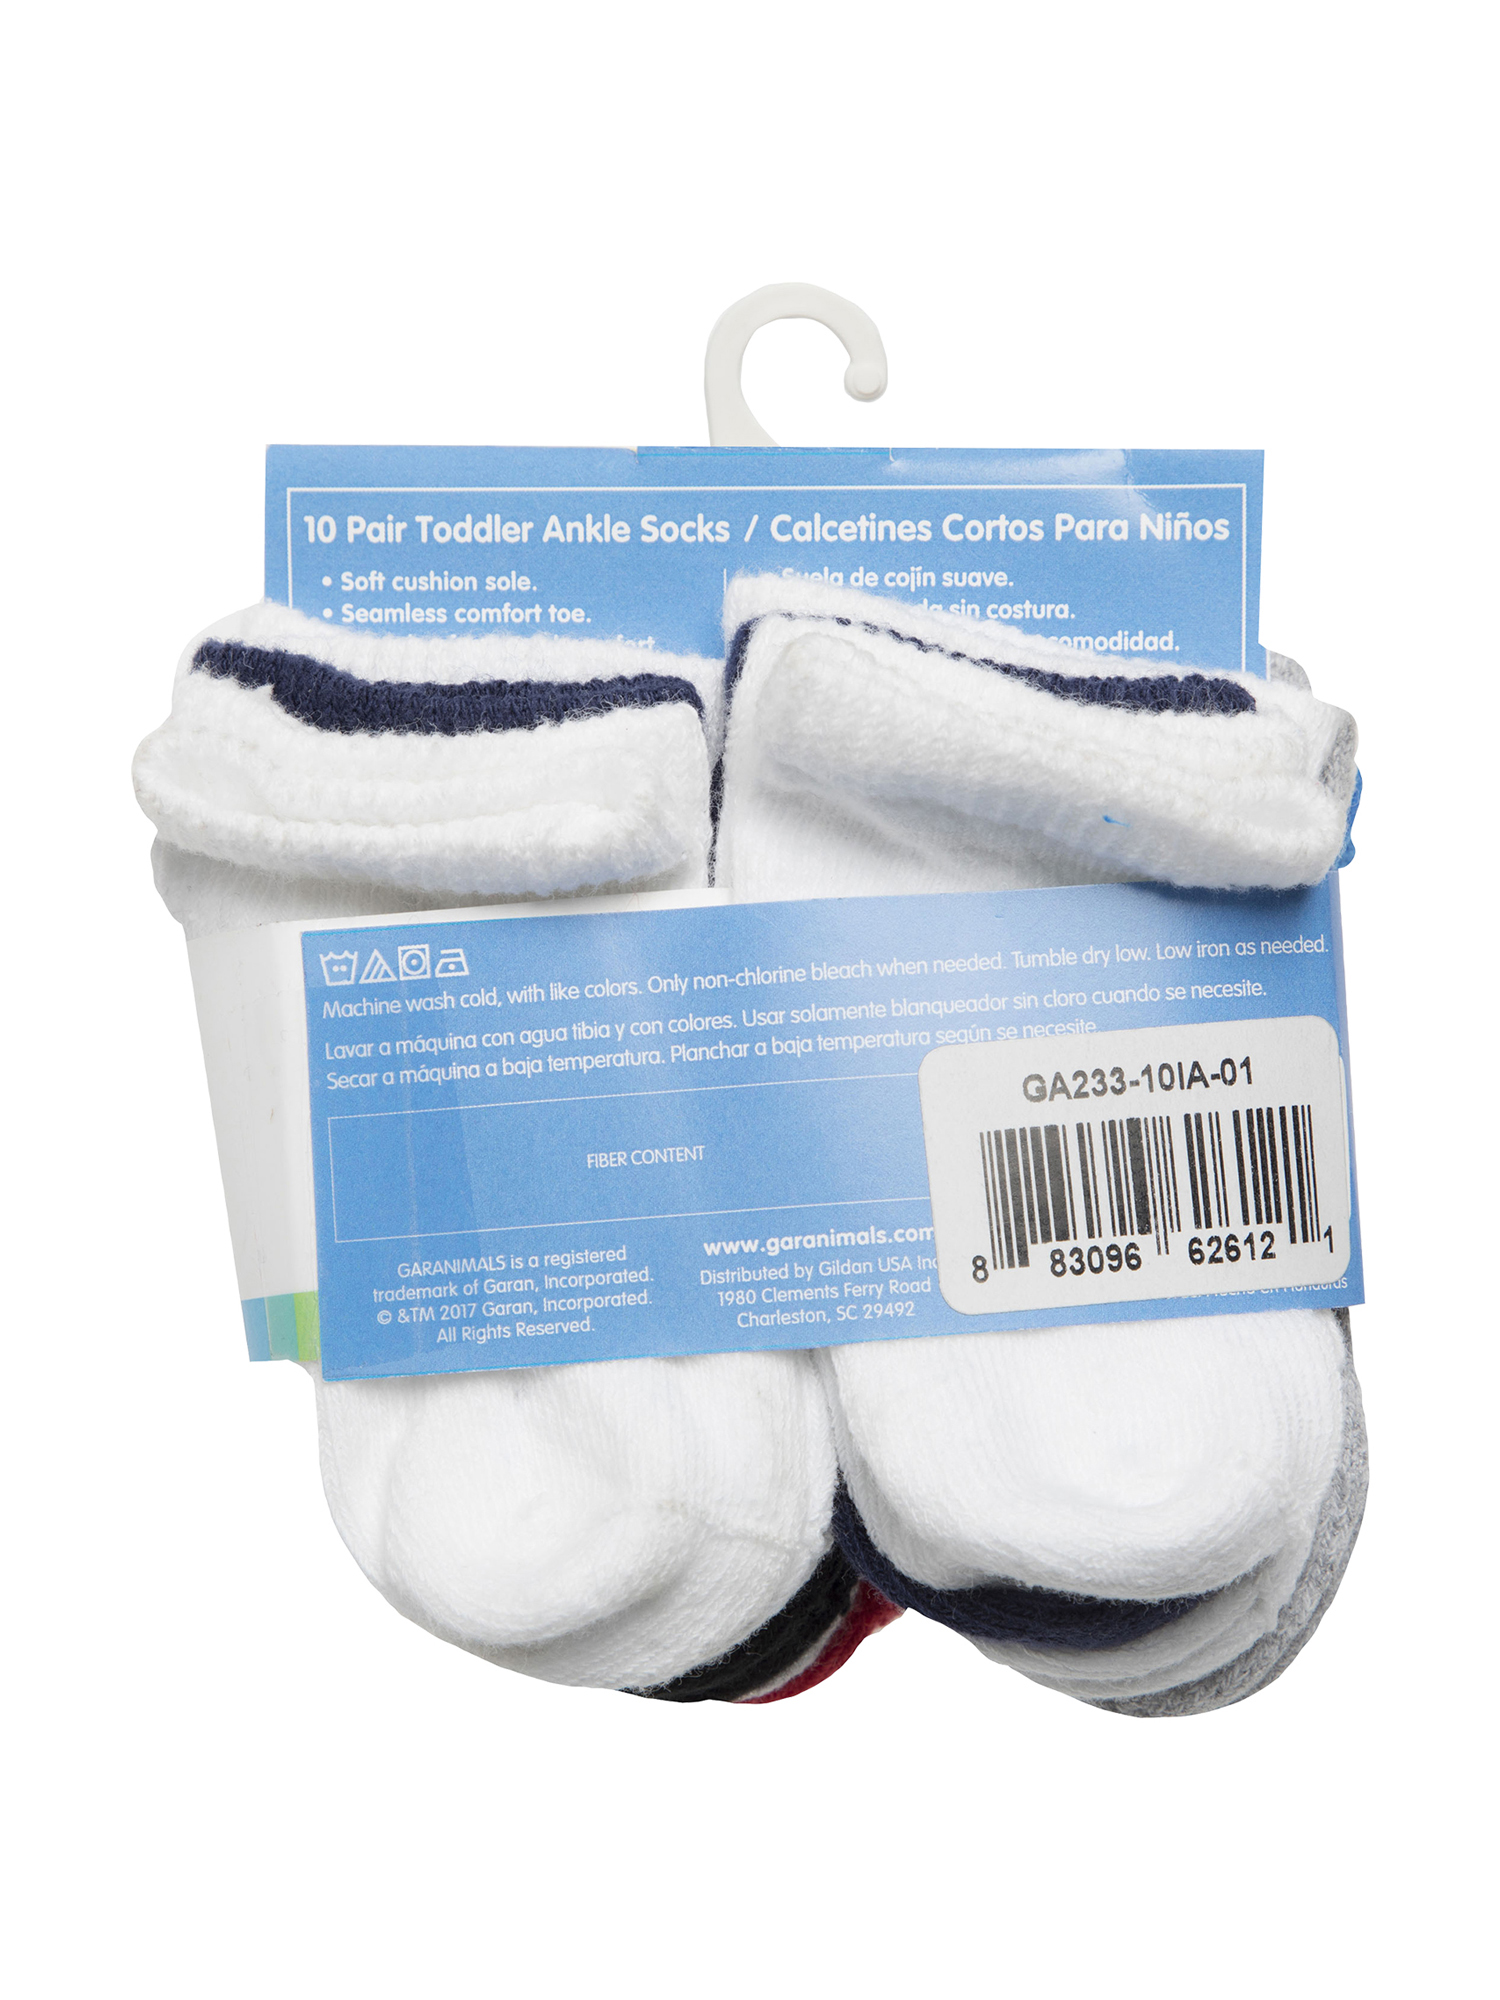 Garanimals Assorted Ankle Socks, 10-Pack (Baby Boys & Toddler Boys) - image 3 of 3